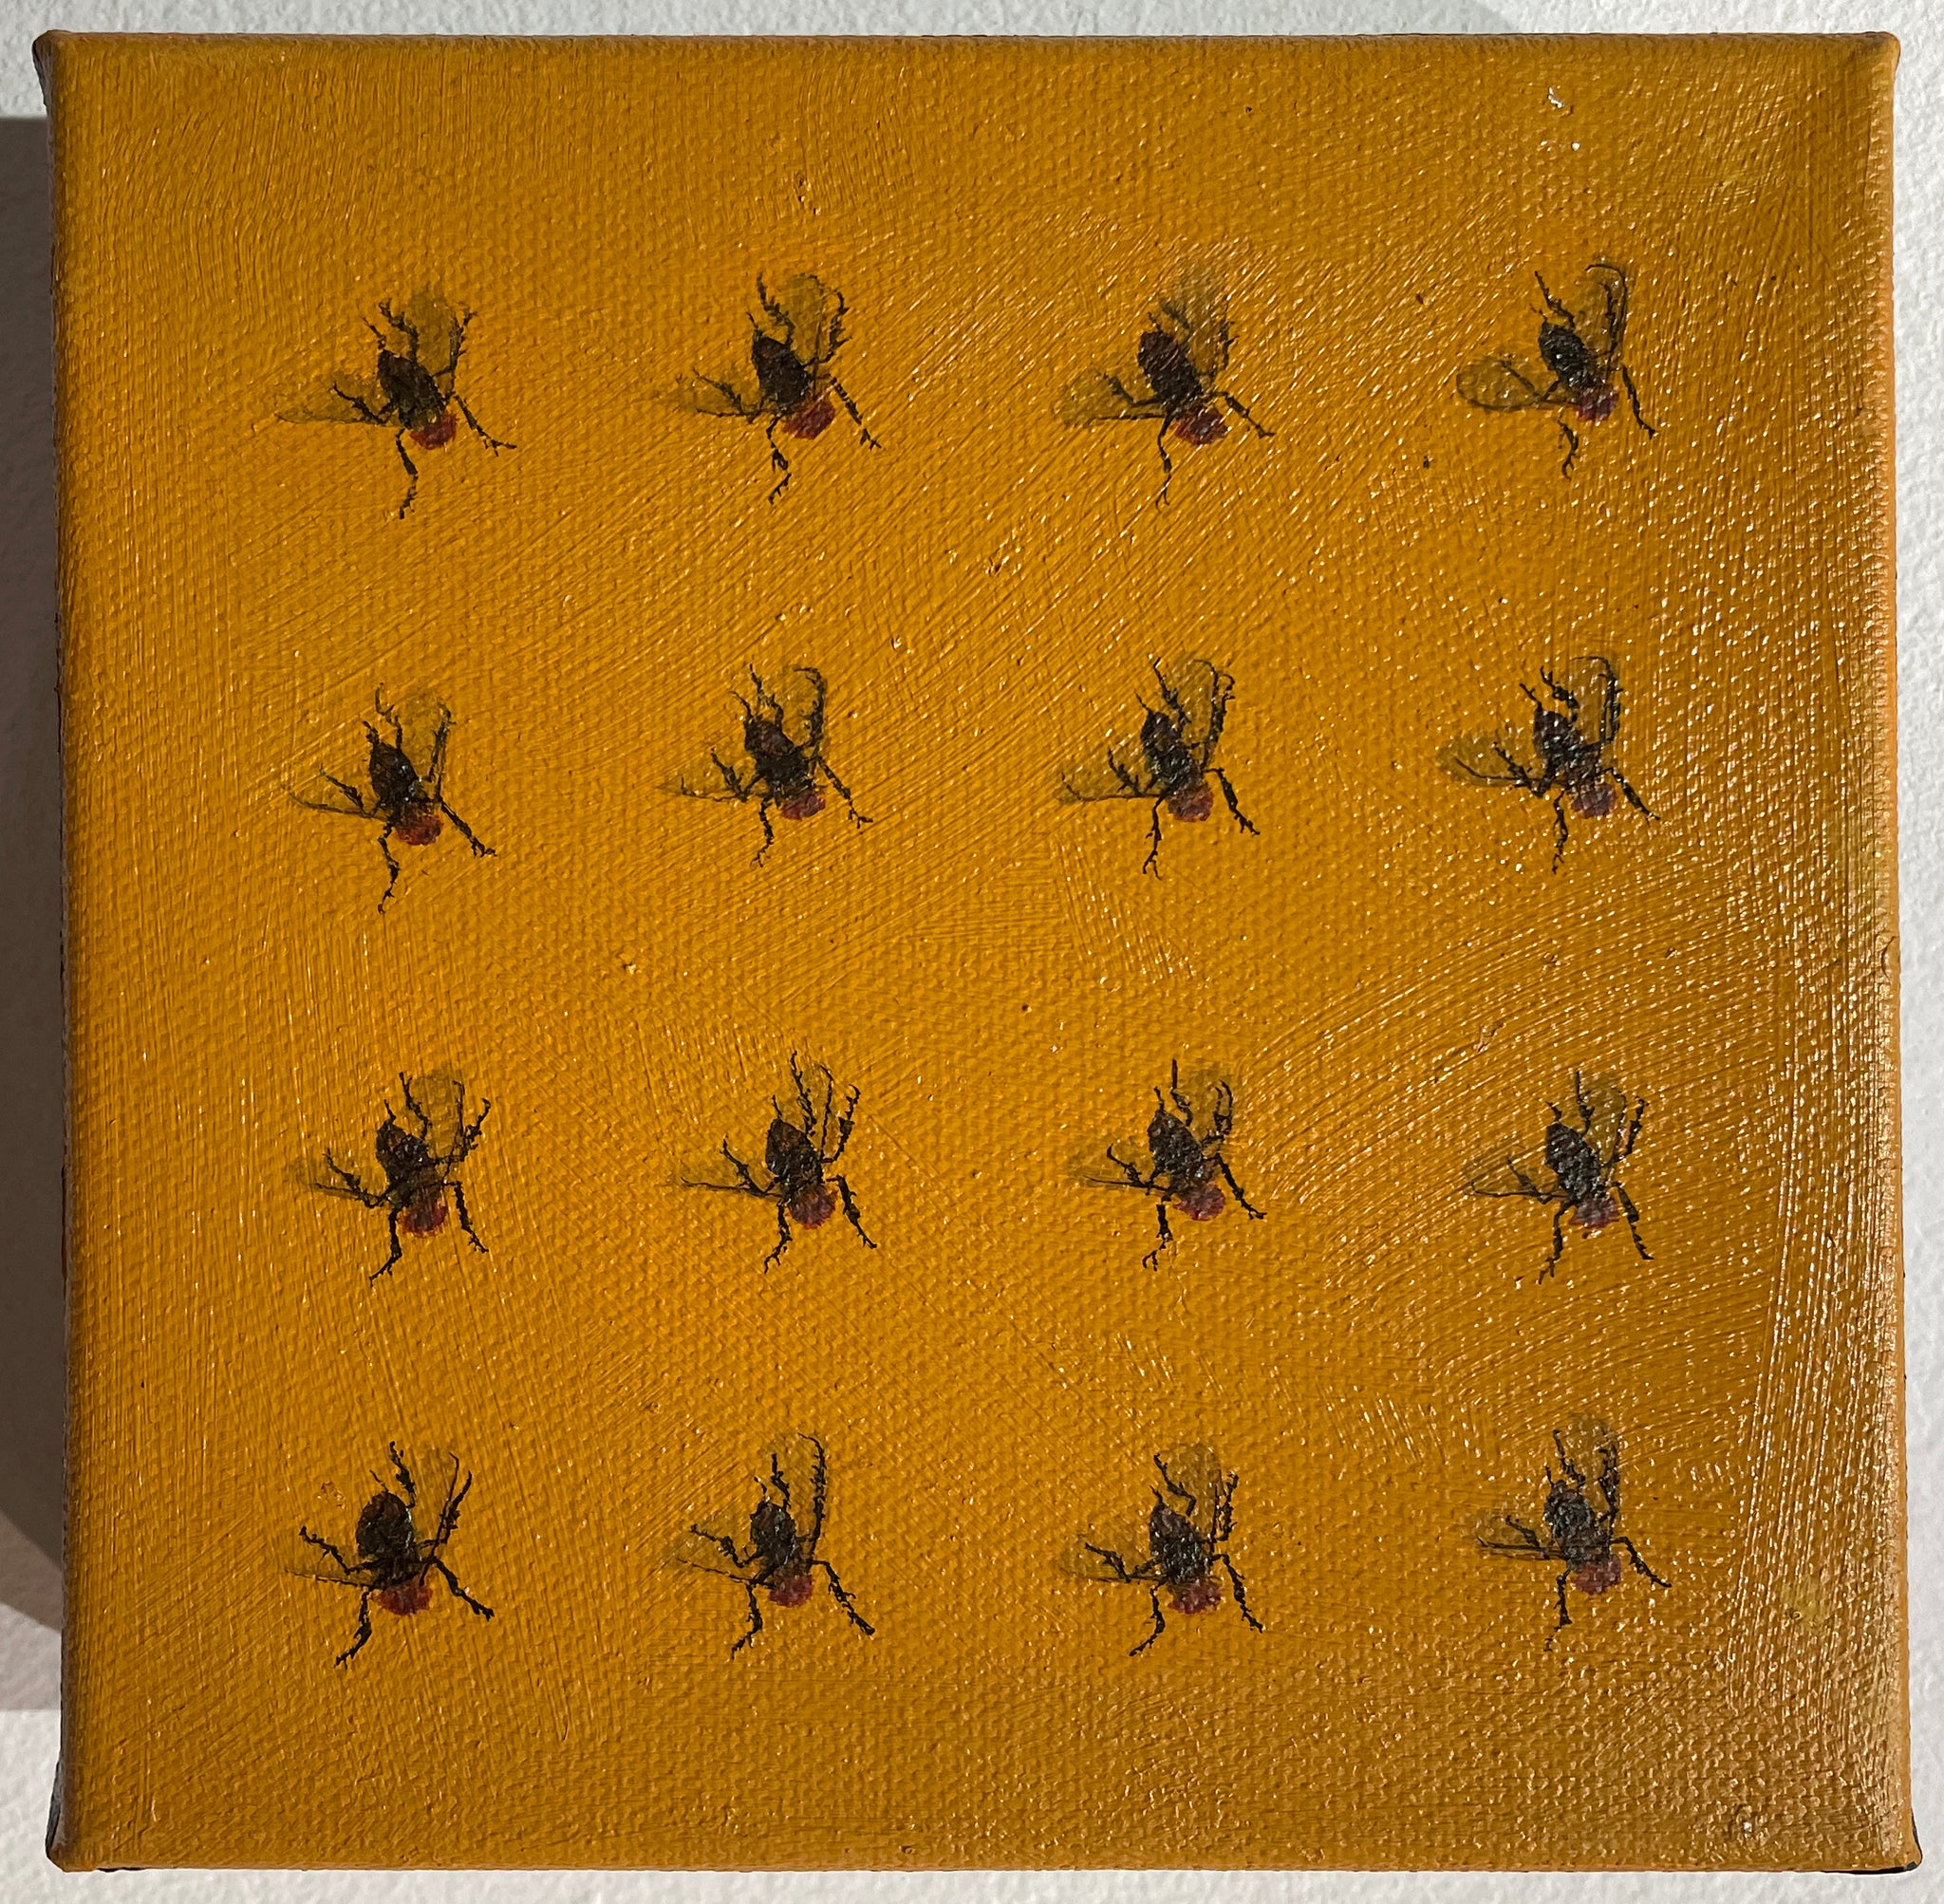 Mia Hause, "Flies (2)"